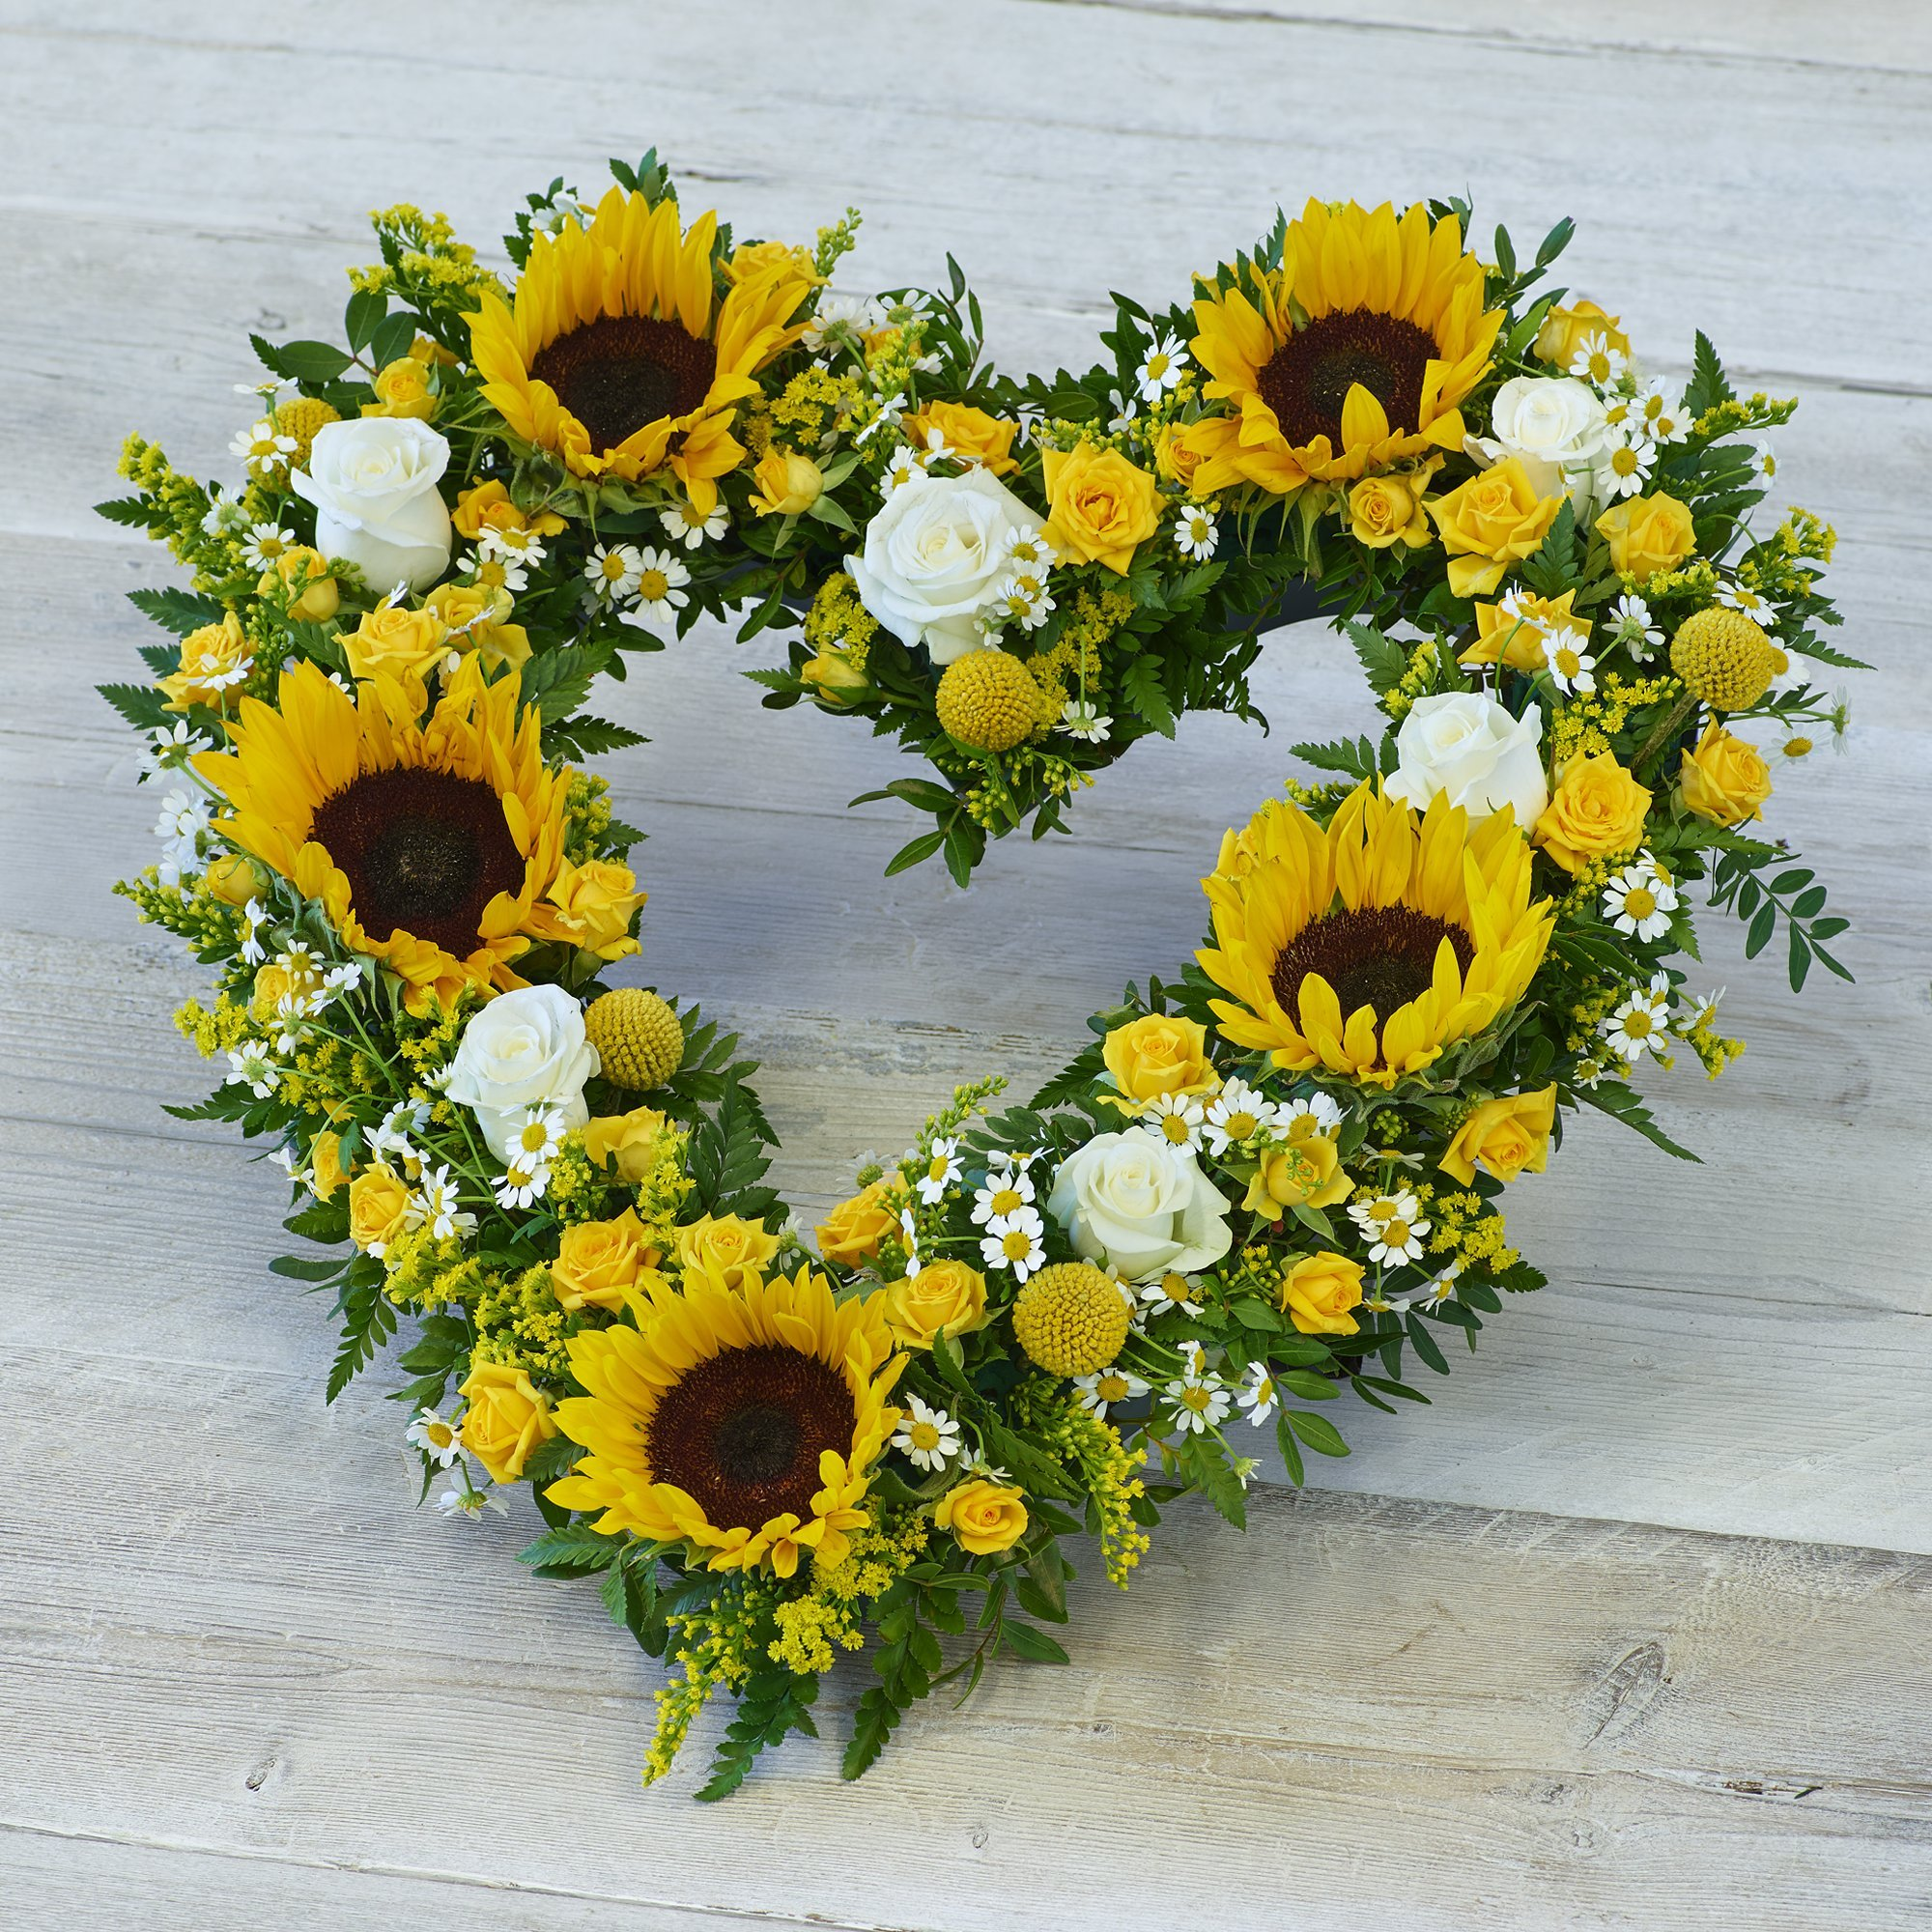 Striking Sunflower Heart image